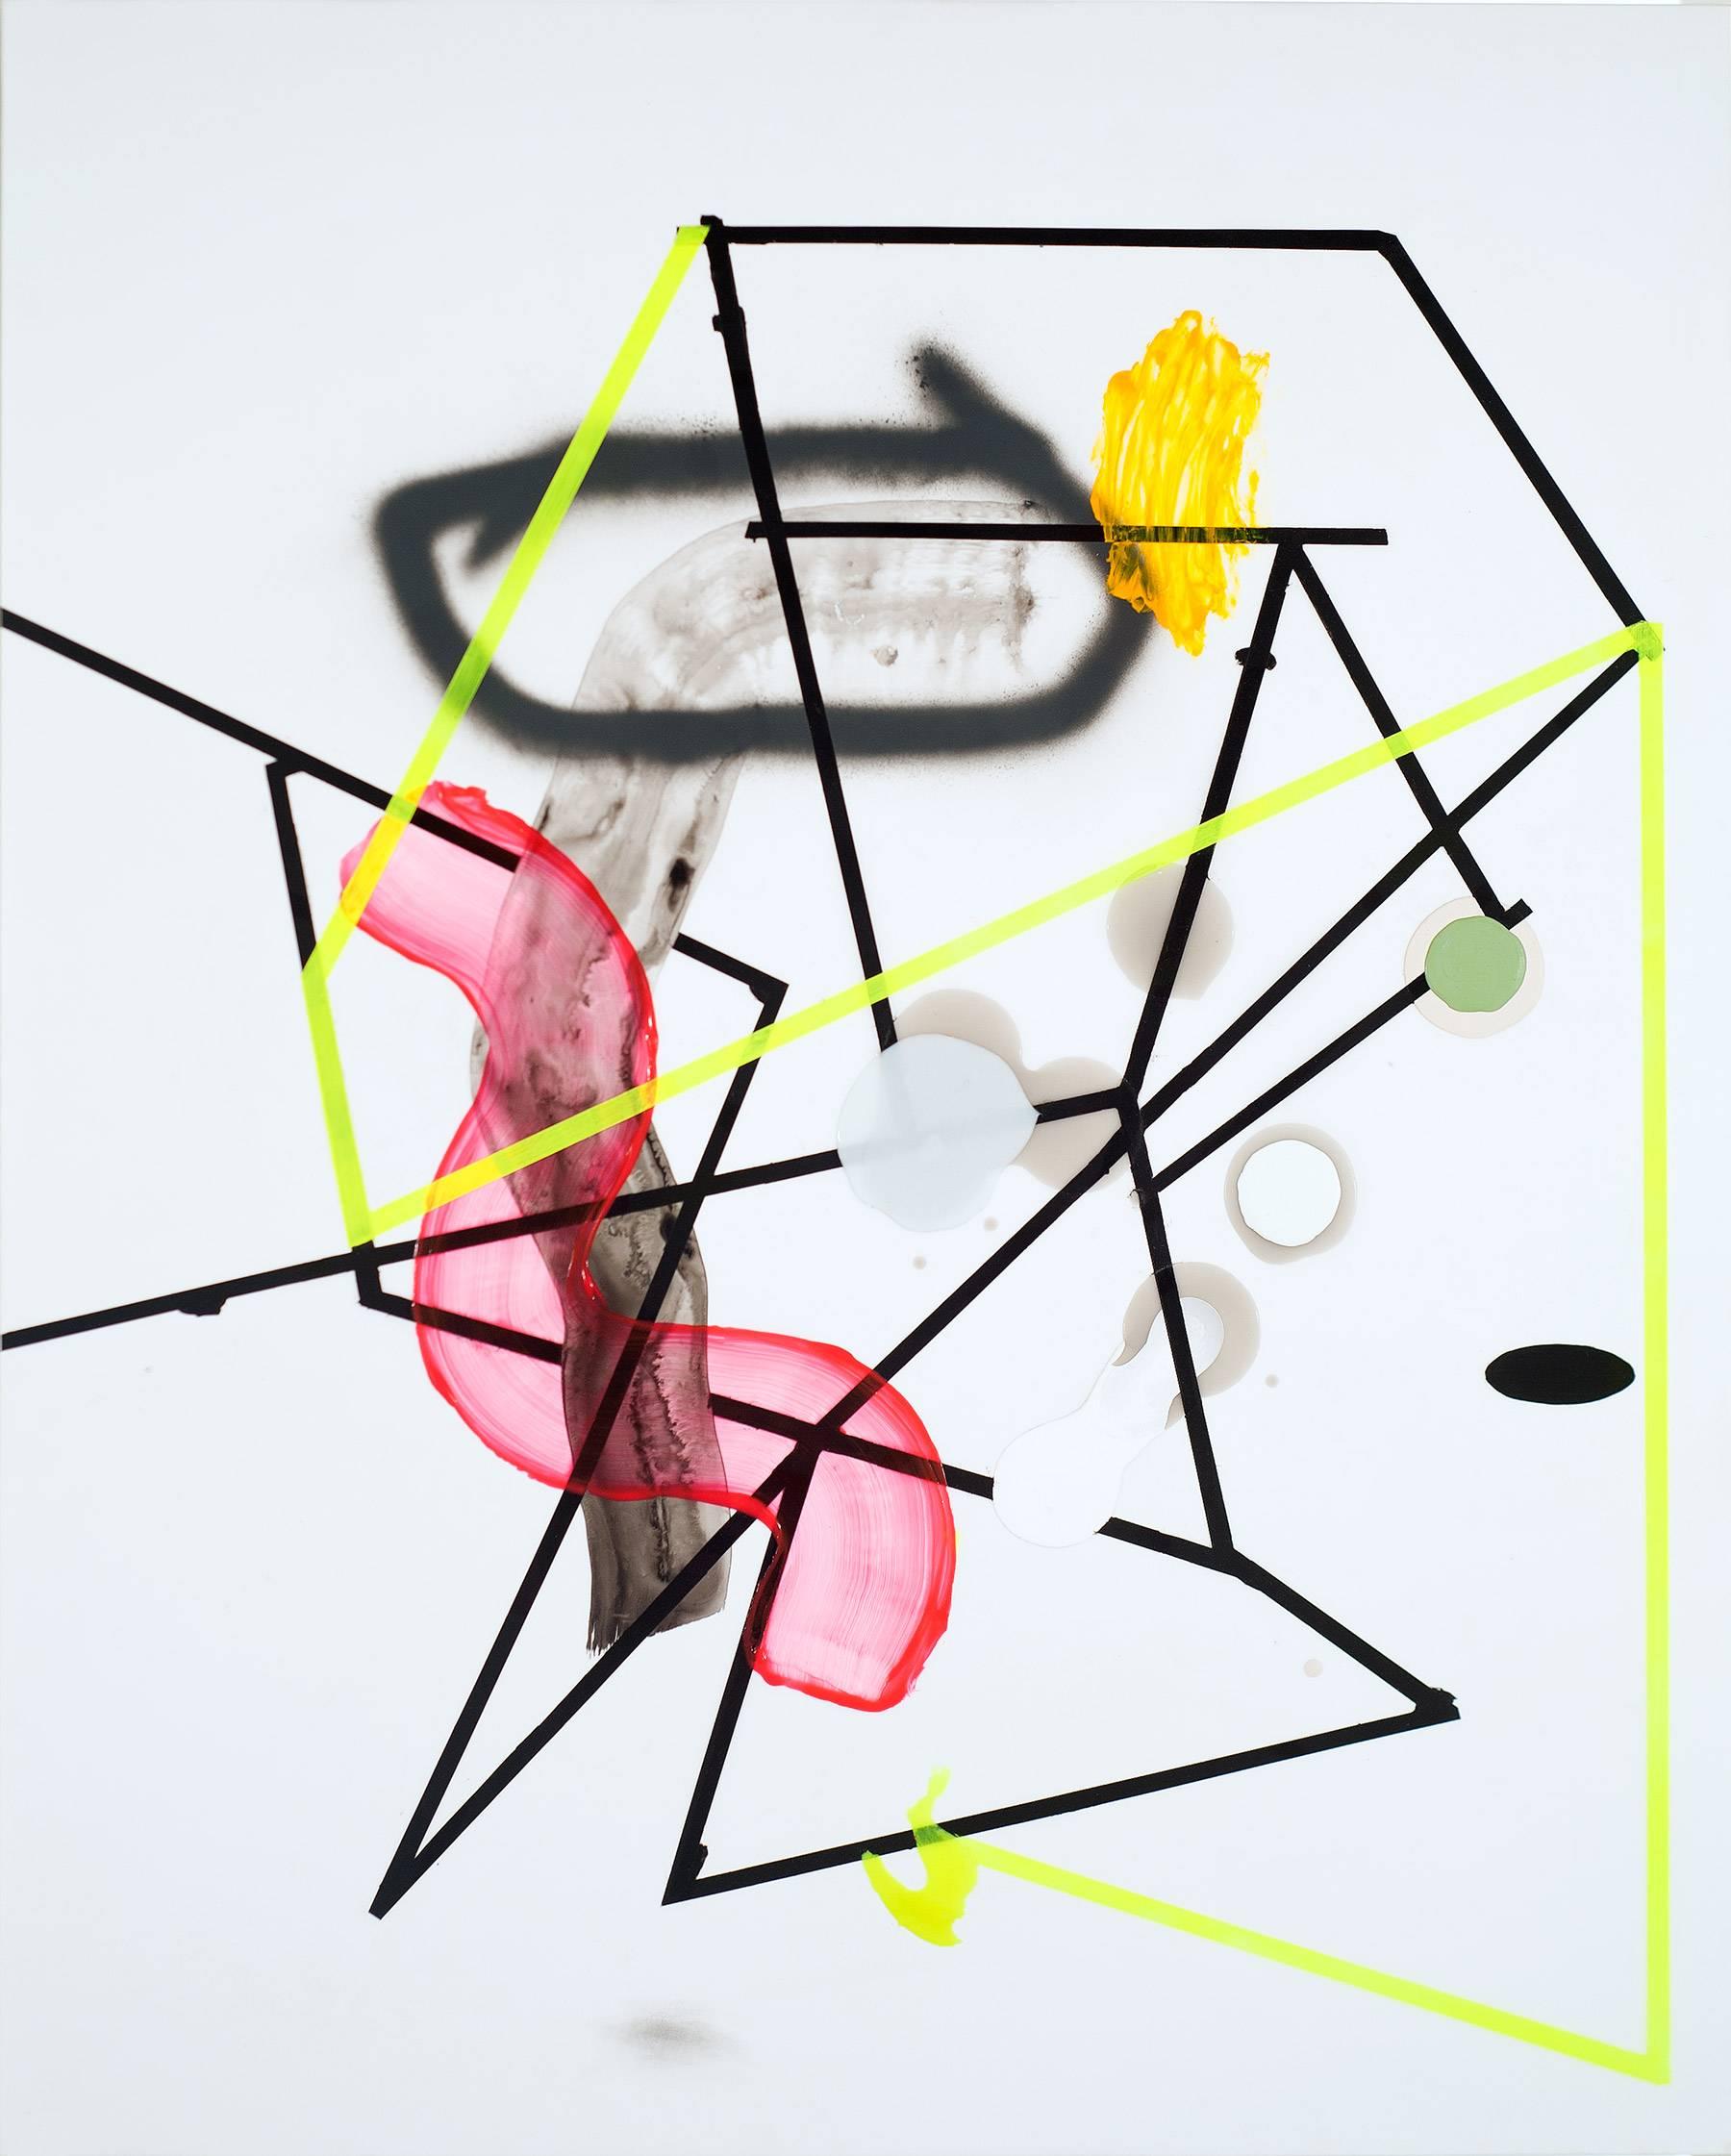 Jean-Sebastien Denis Abstract Painting - Petite Machination #16-01, abstract mixed media on mylar